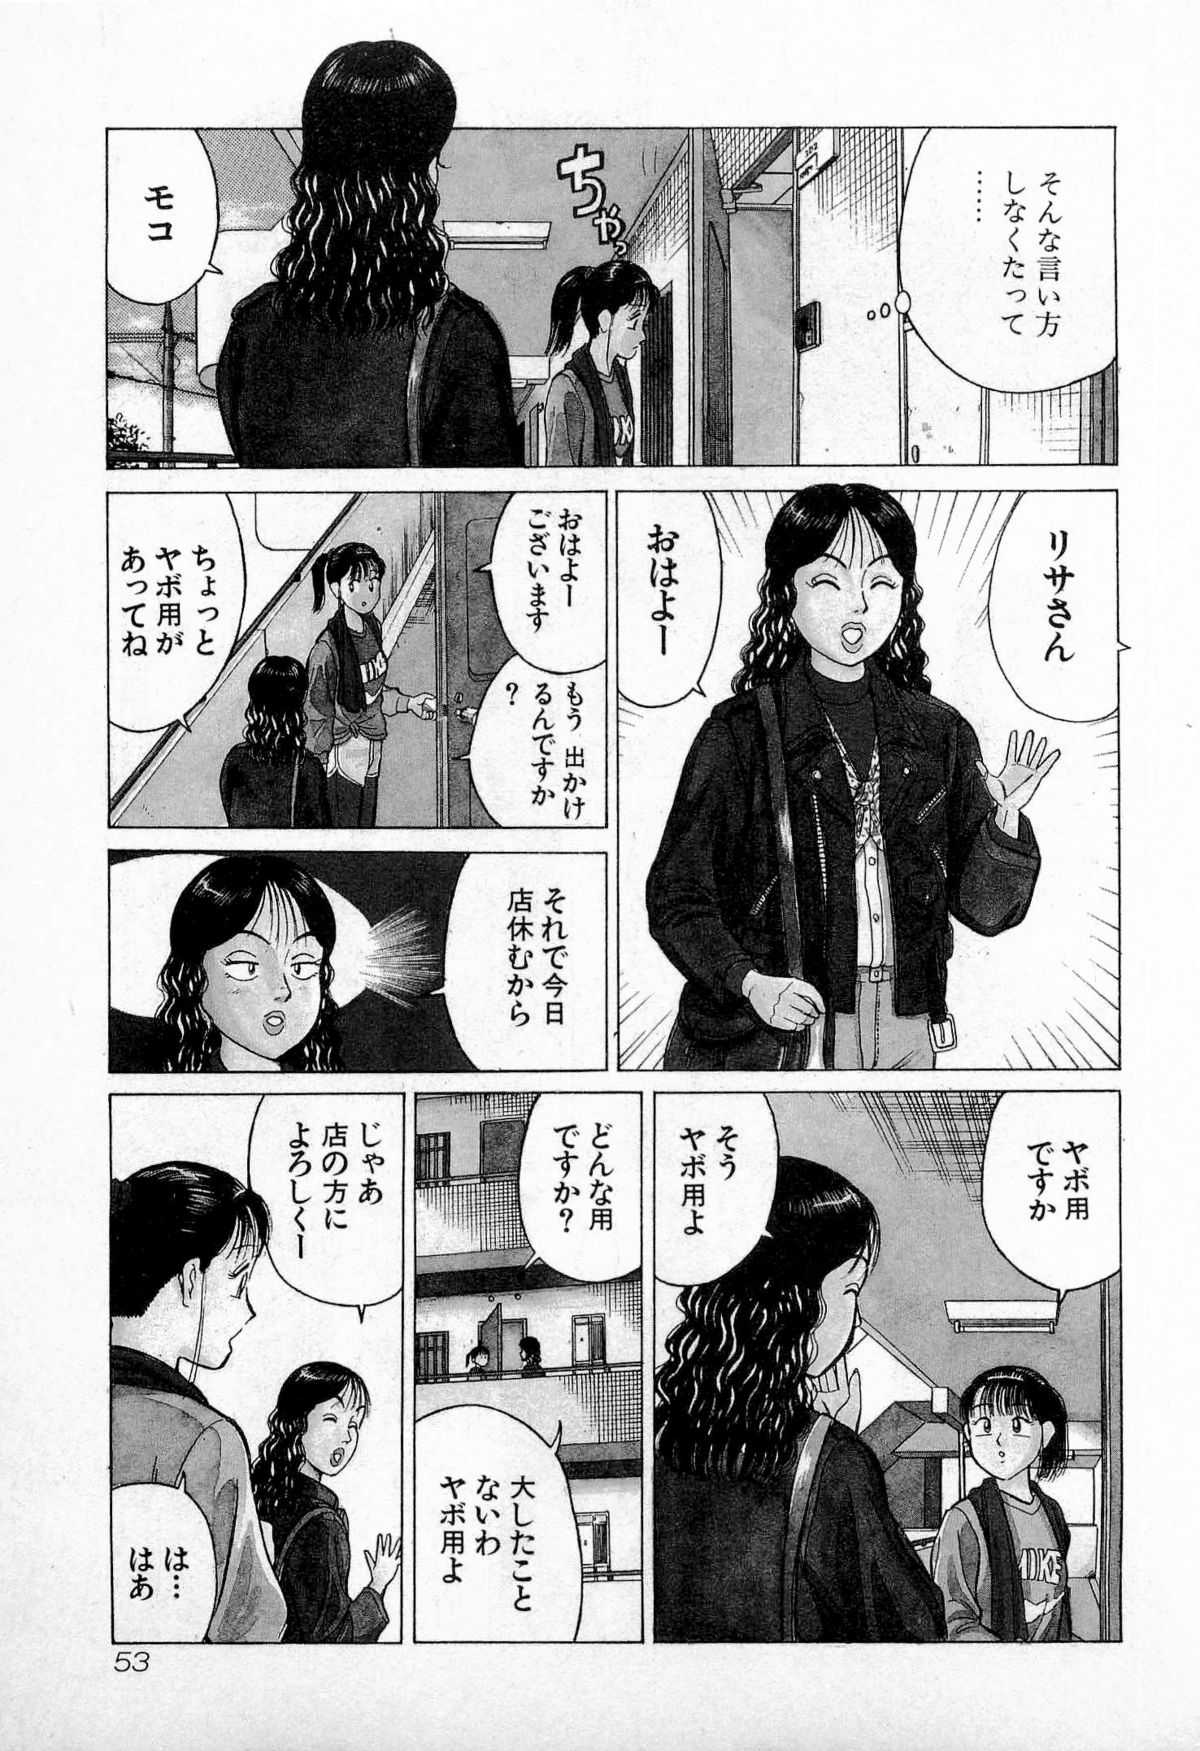 [Kusugawa Naruo] SOAP no MOKO chan Vol.3 [久寿川なるお] SOAPのMOKOちゃん Vol.3